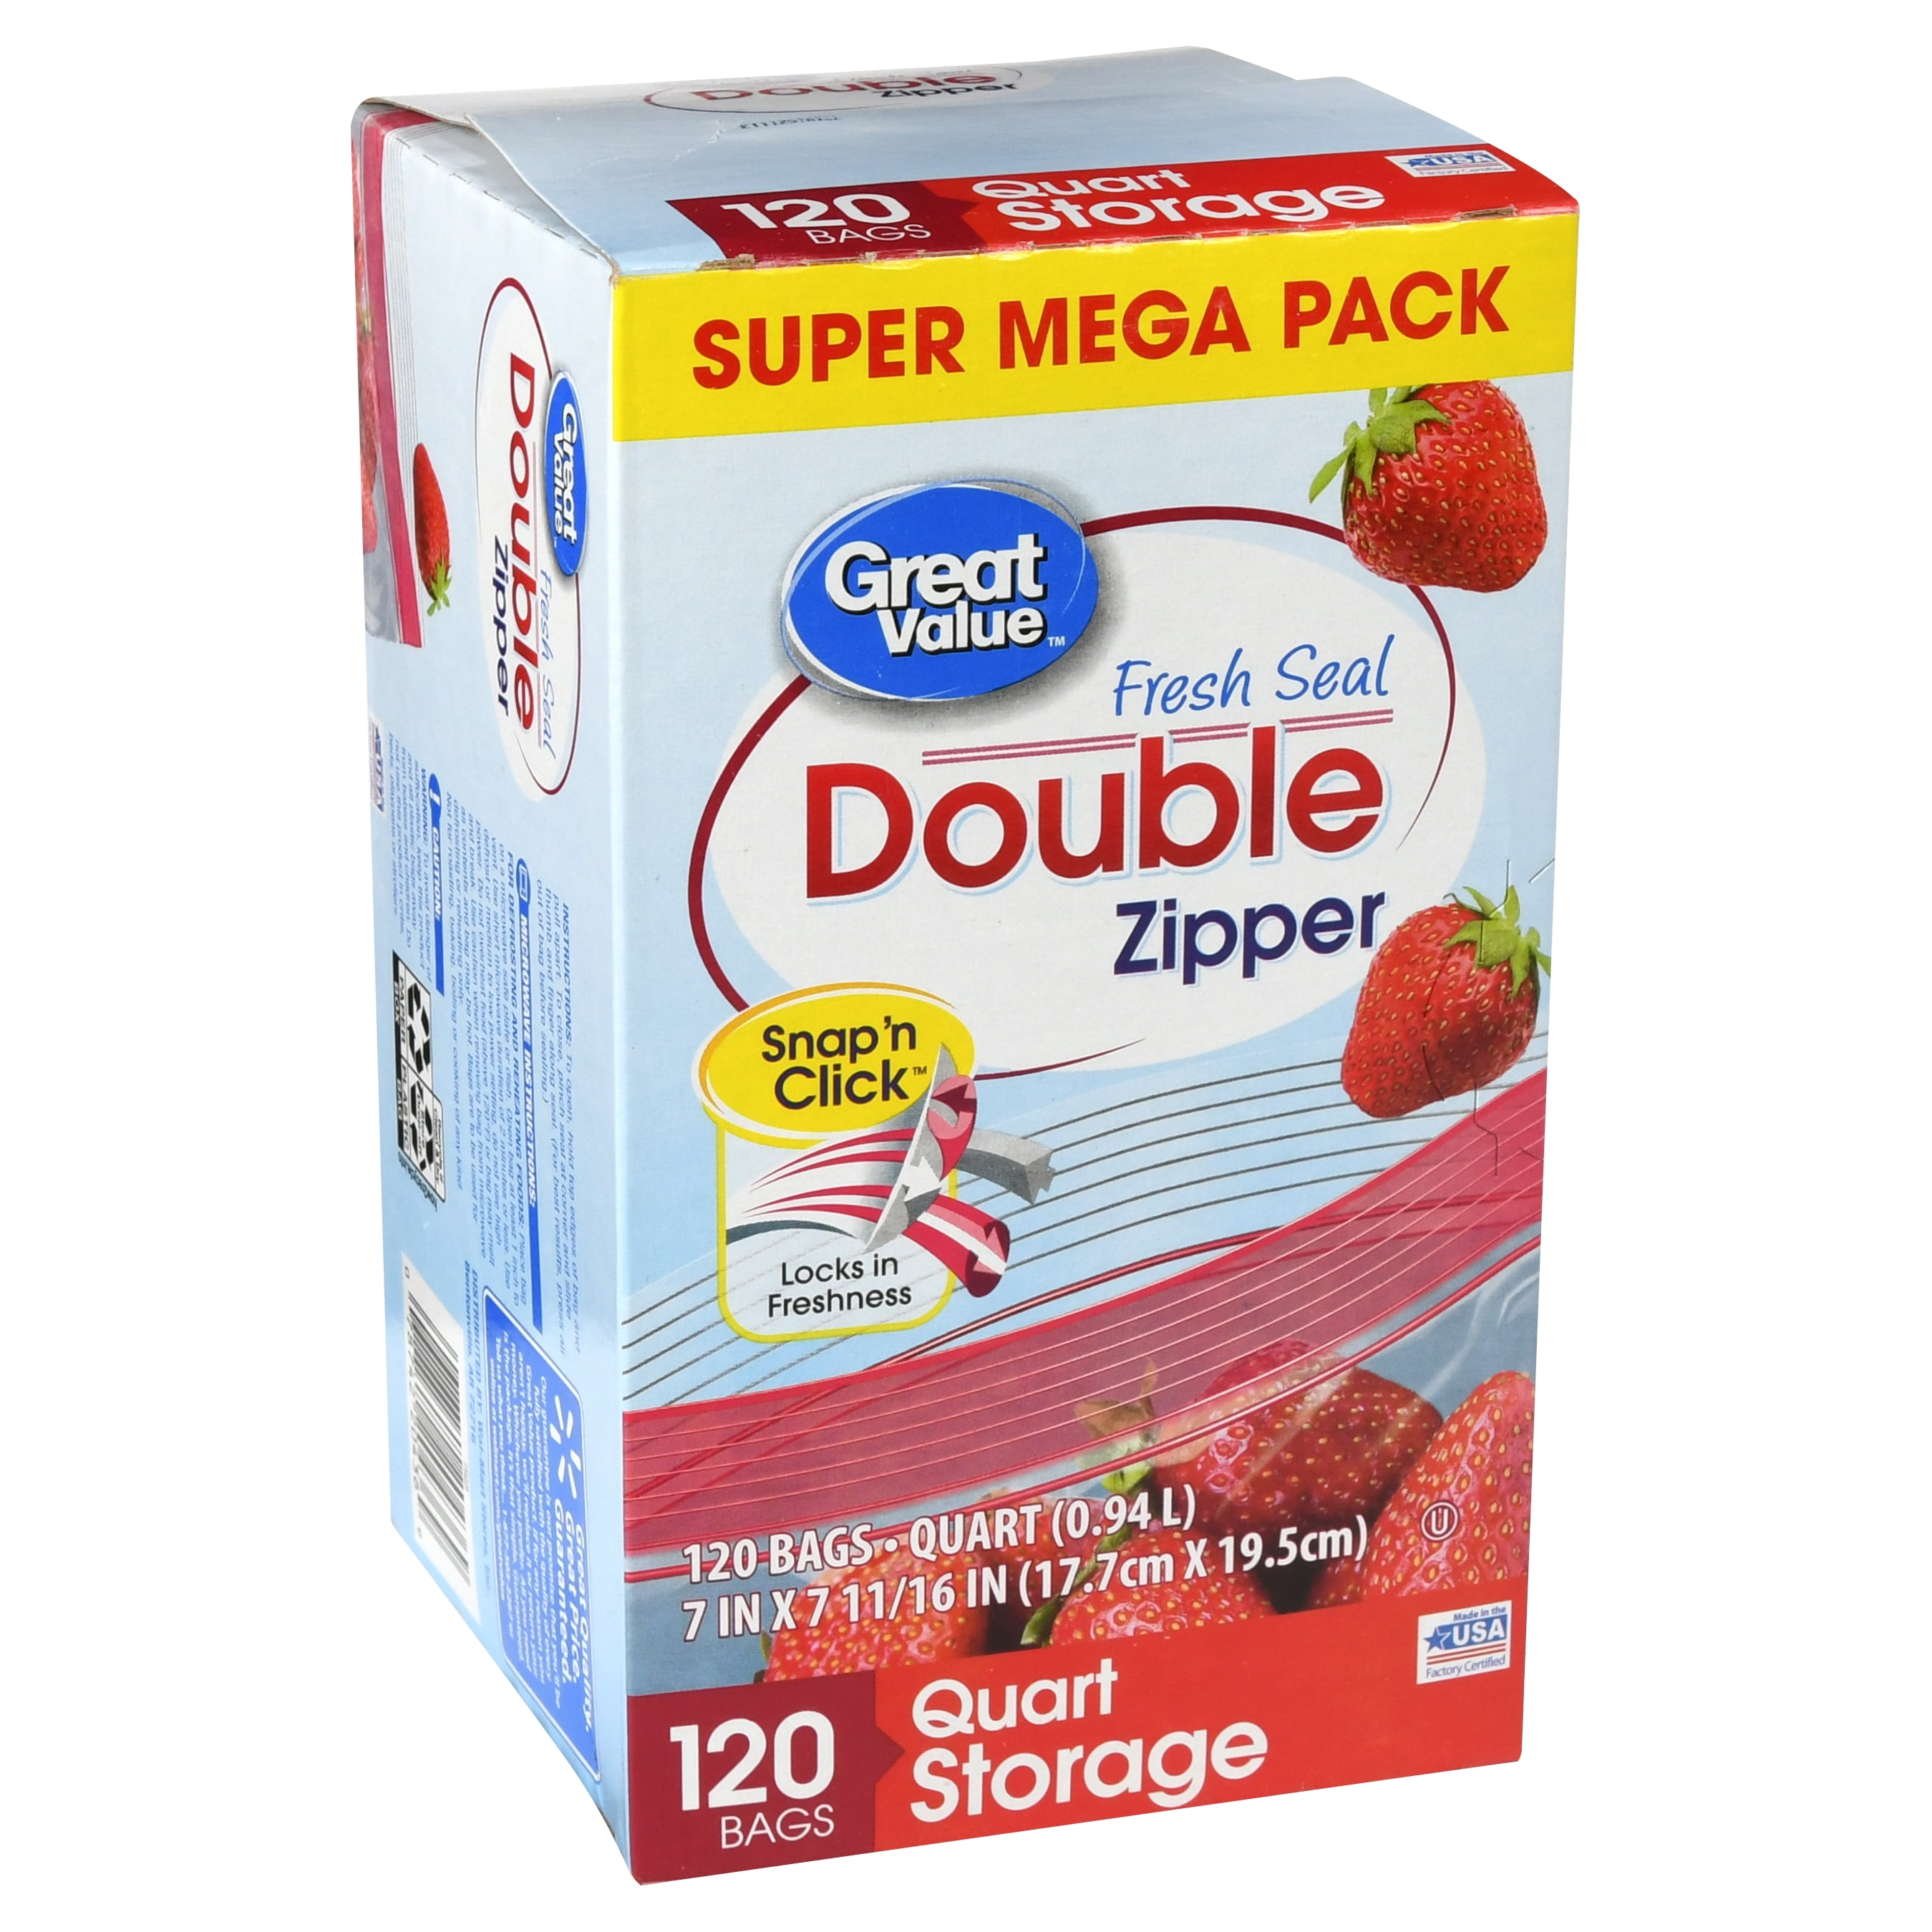 Signature SELECT Bags Food Storage Click & Lock Double Zipper Gallon - 38  Count - Star Market